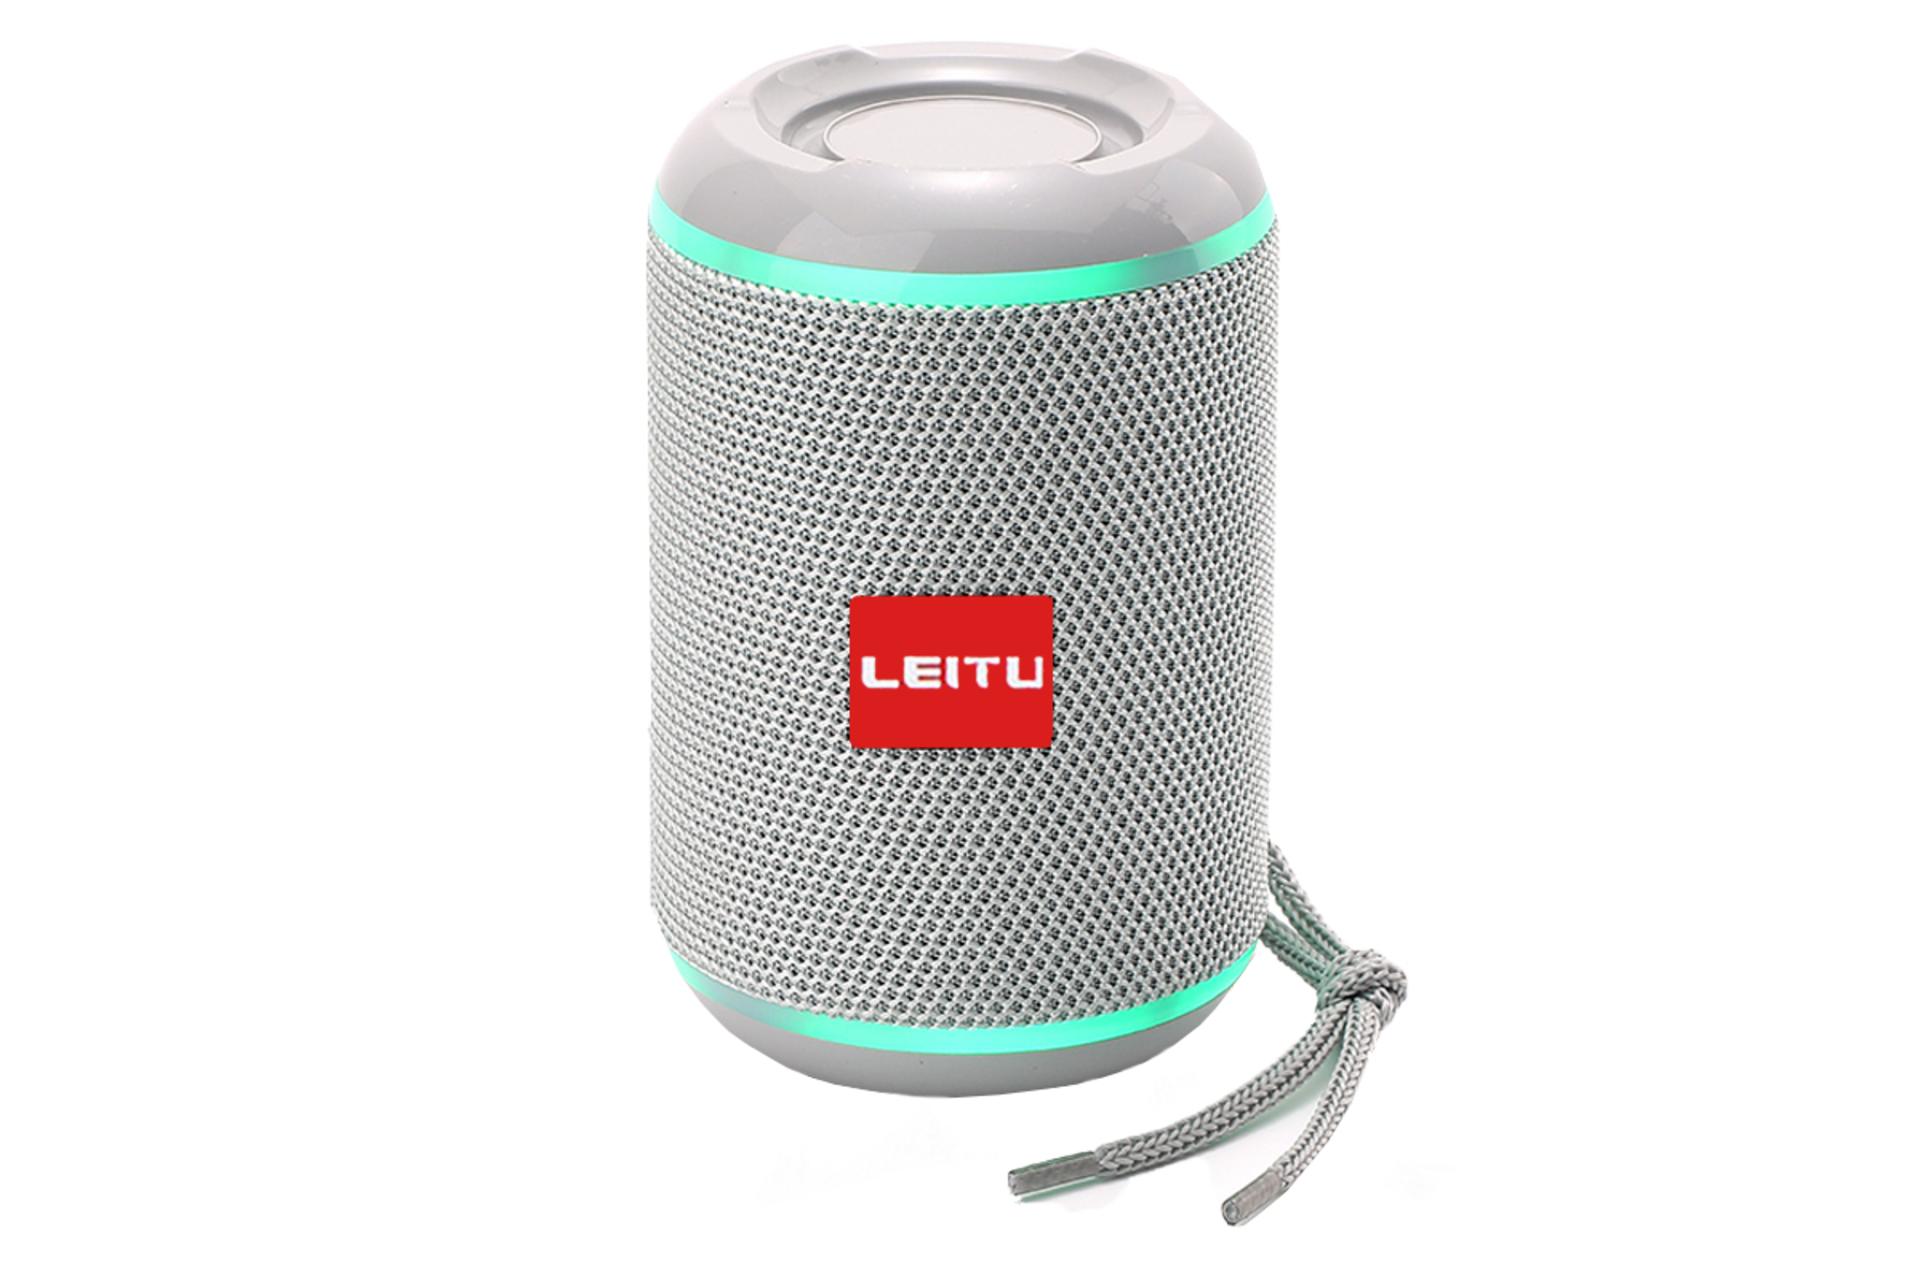 ابعاد اسپیکر لیتو LEITU LK-23